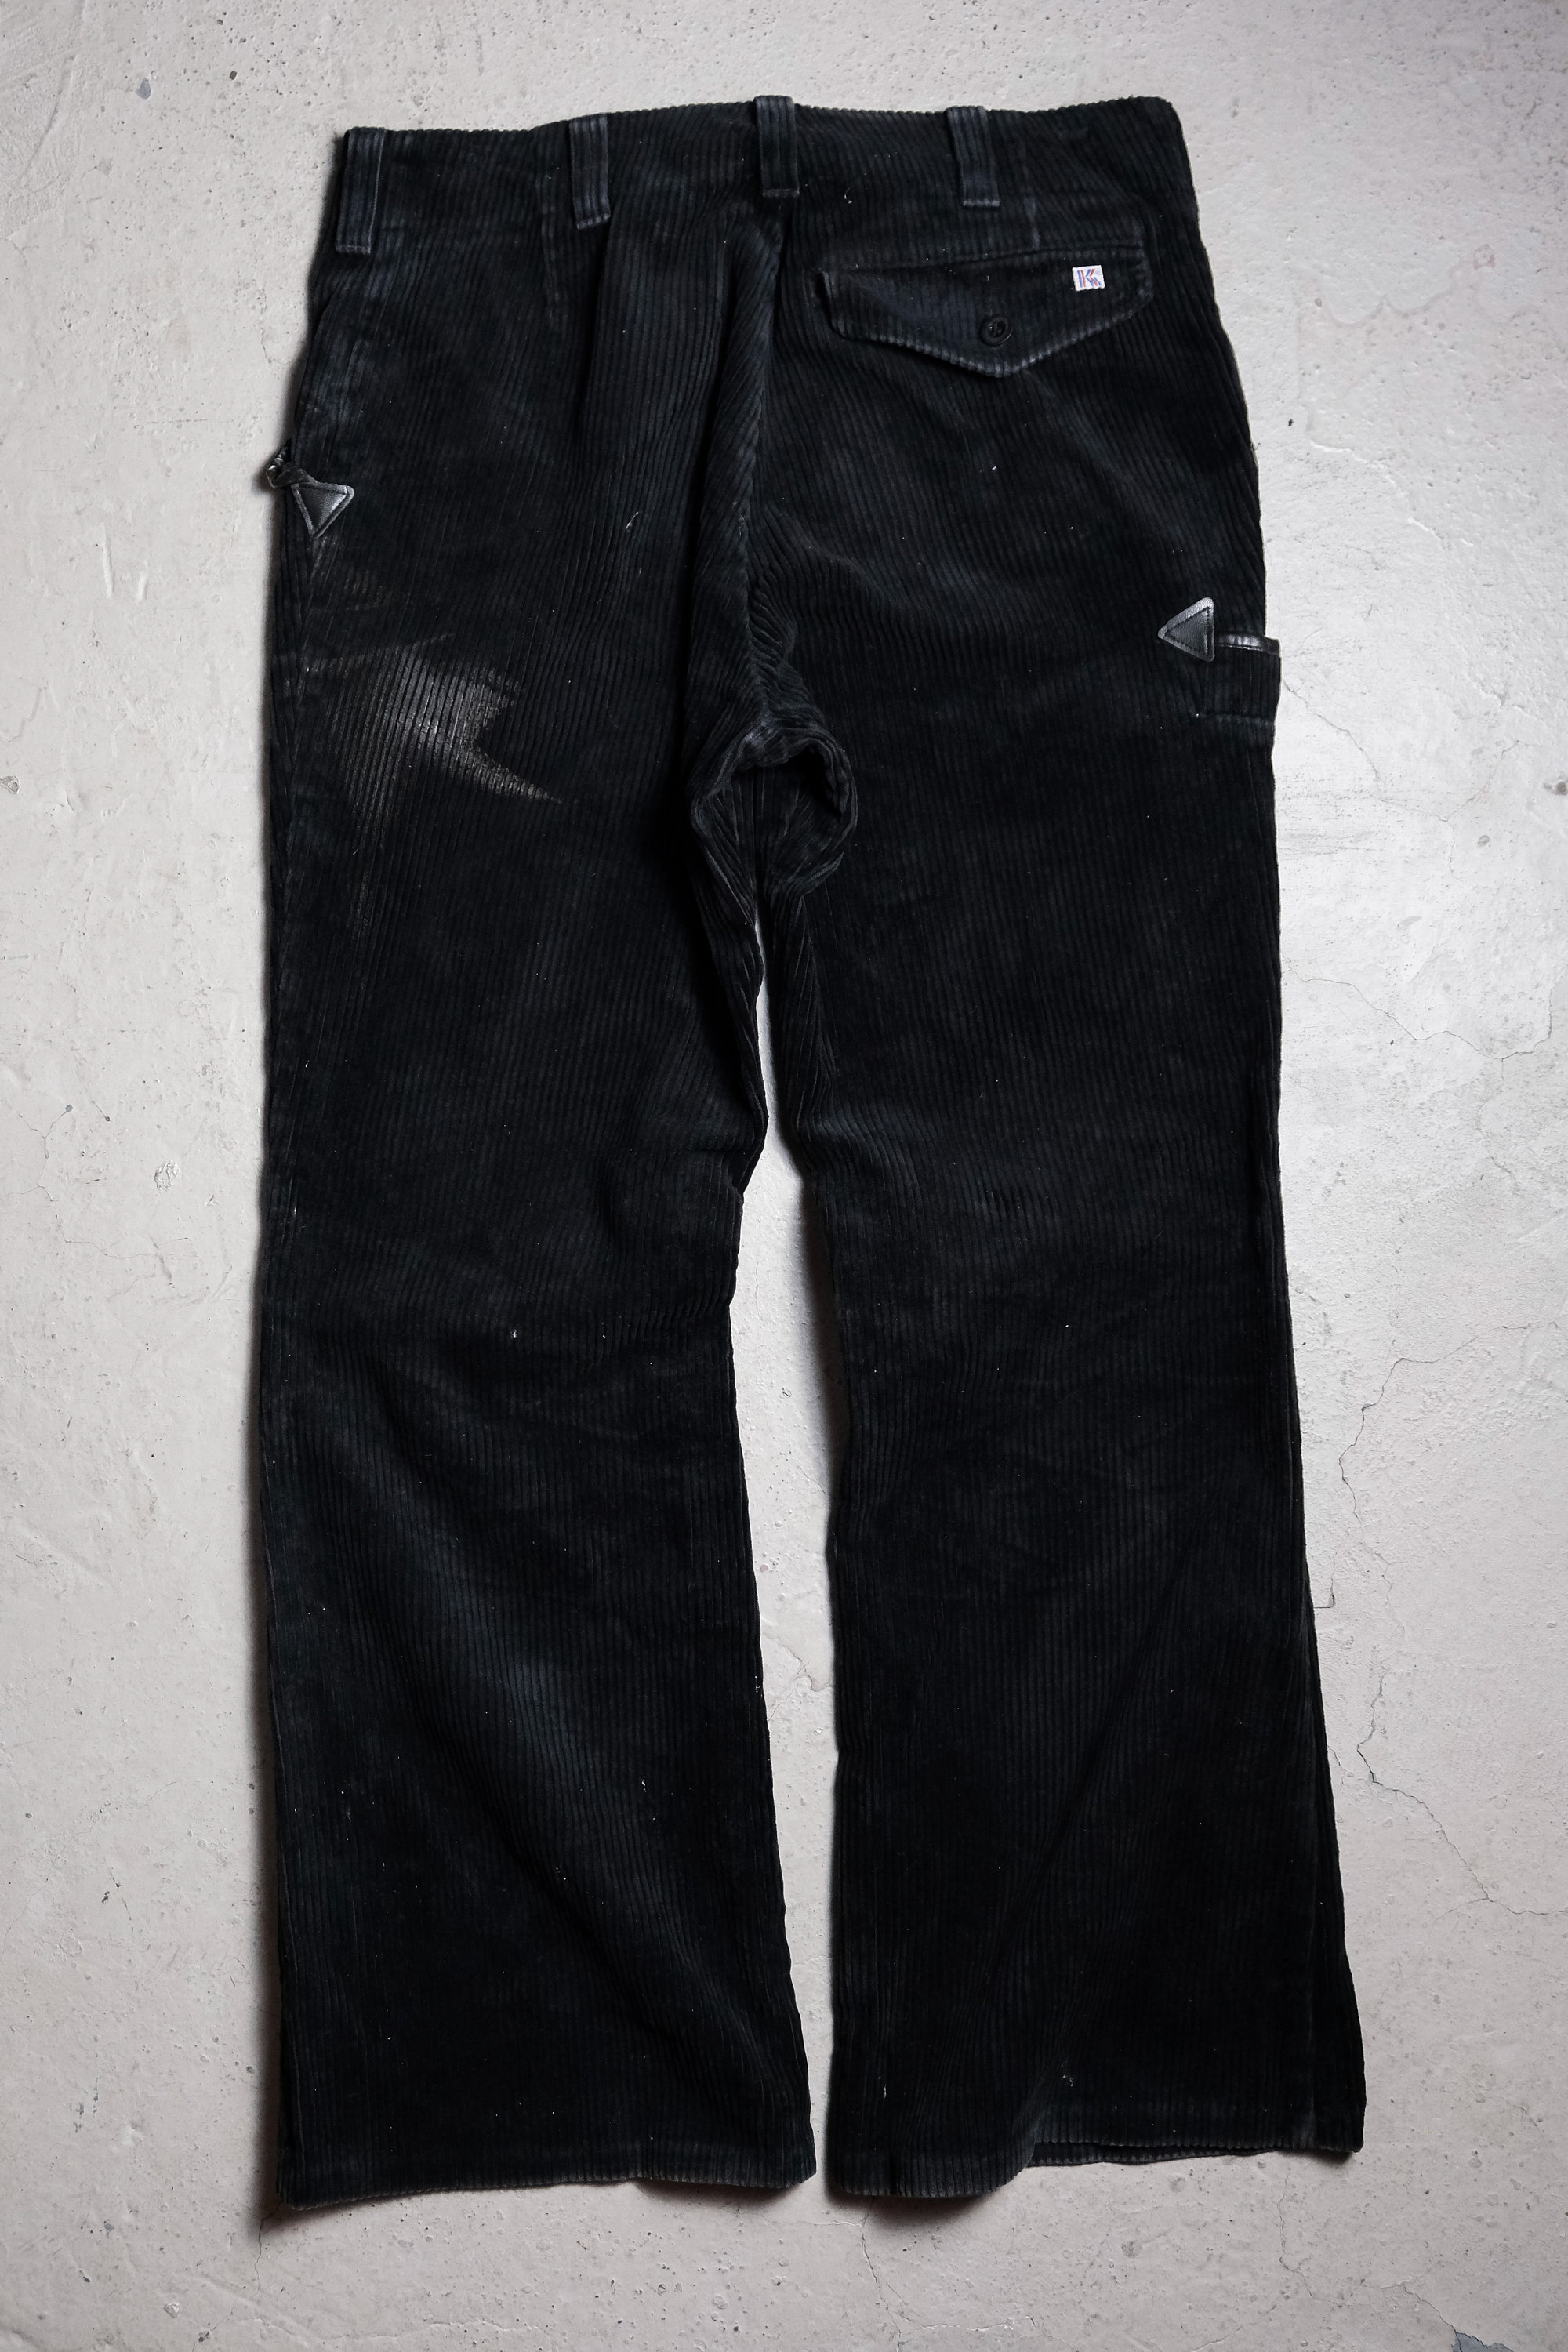 Carpenter Leather Jeans by Mr. S. (biker)